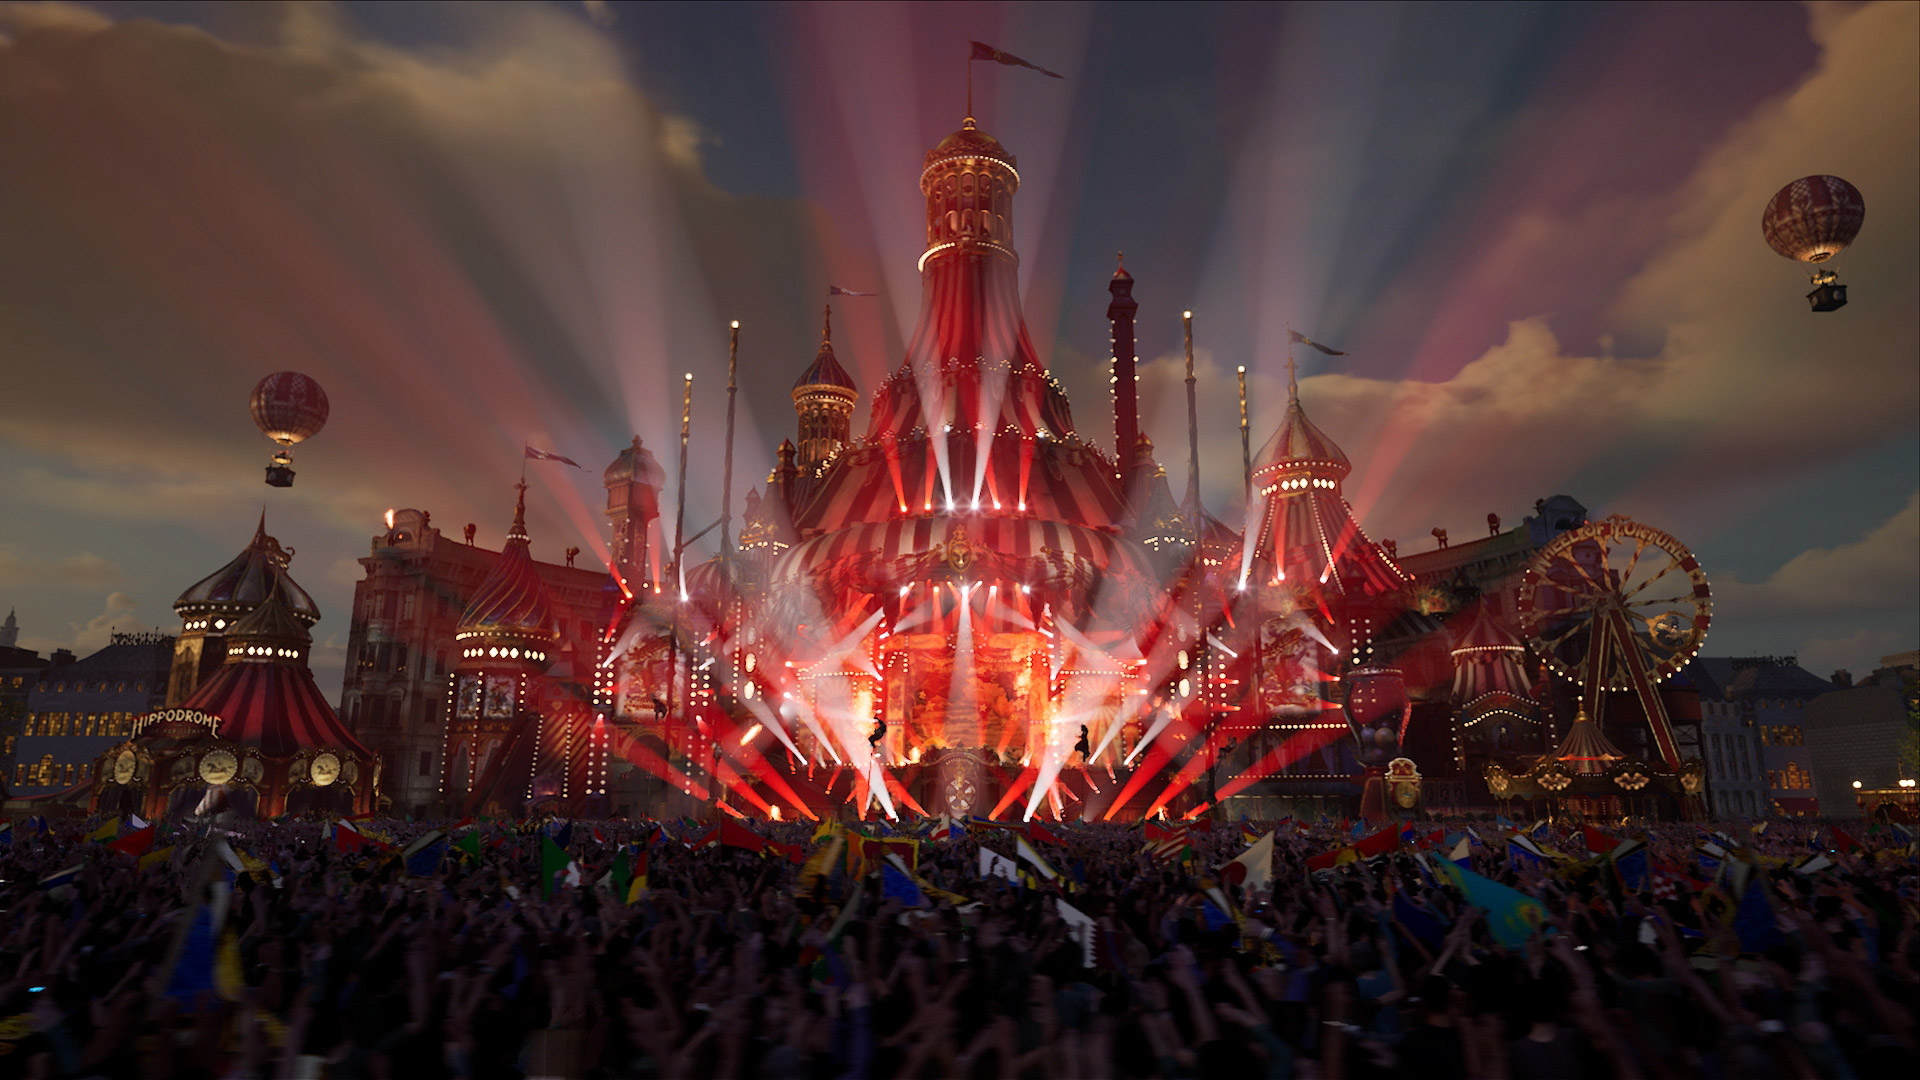 ‘Tomorrowland Around The World' llega este fin de semana con 40 DJs y baile virtual